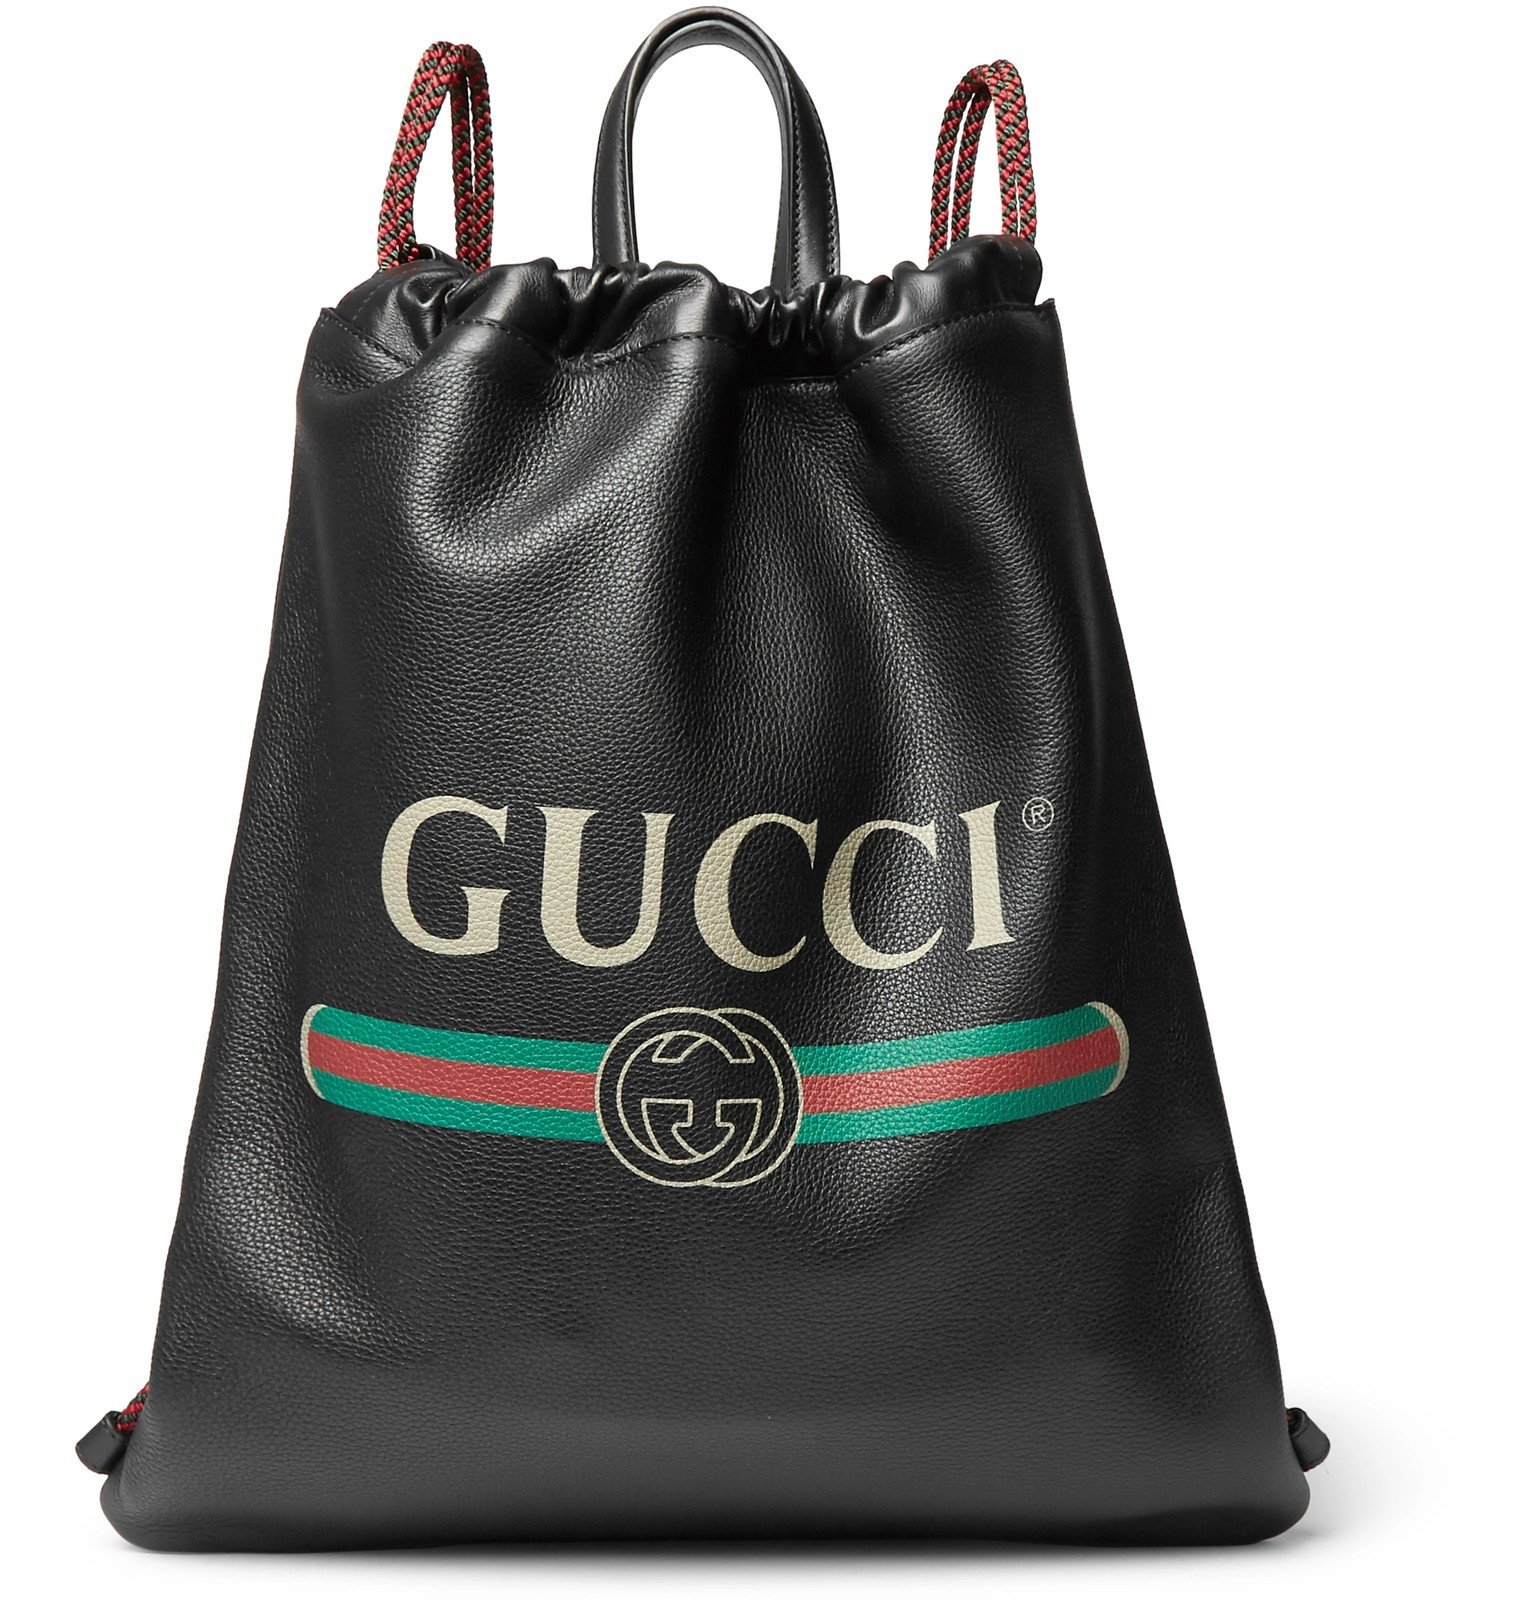 Gucci - Printed Full-Grain Leather Backpack - Black Gucci